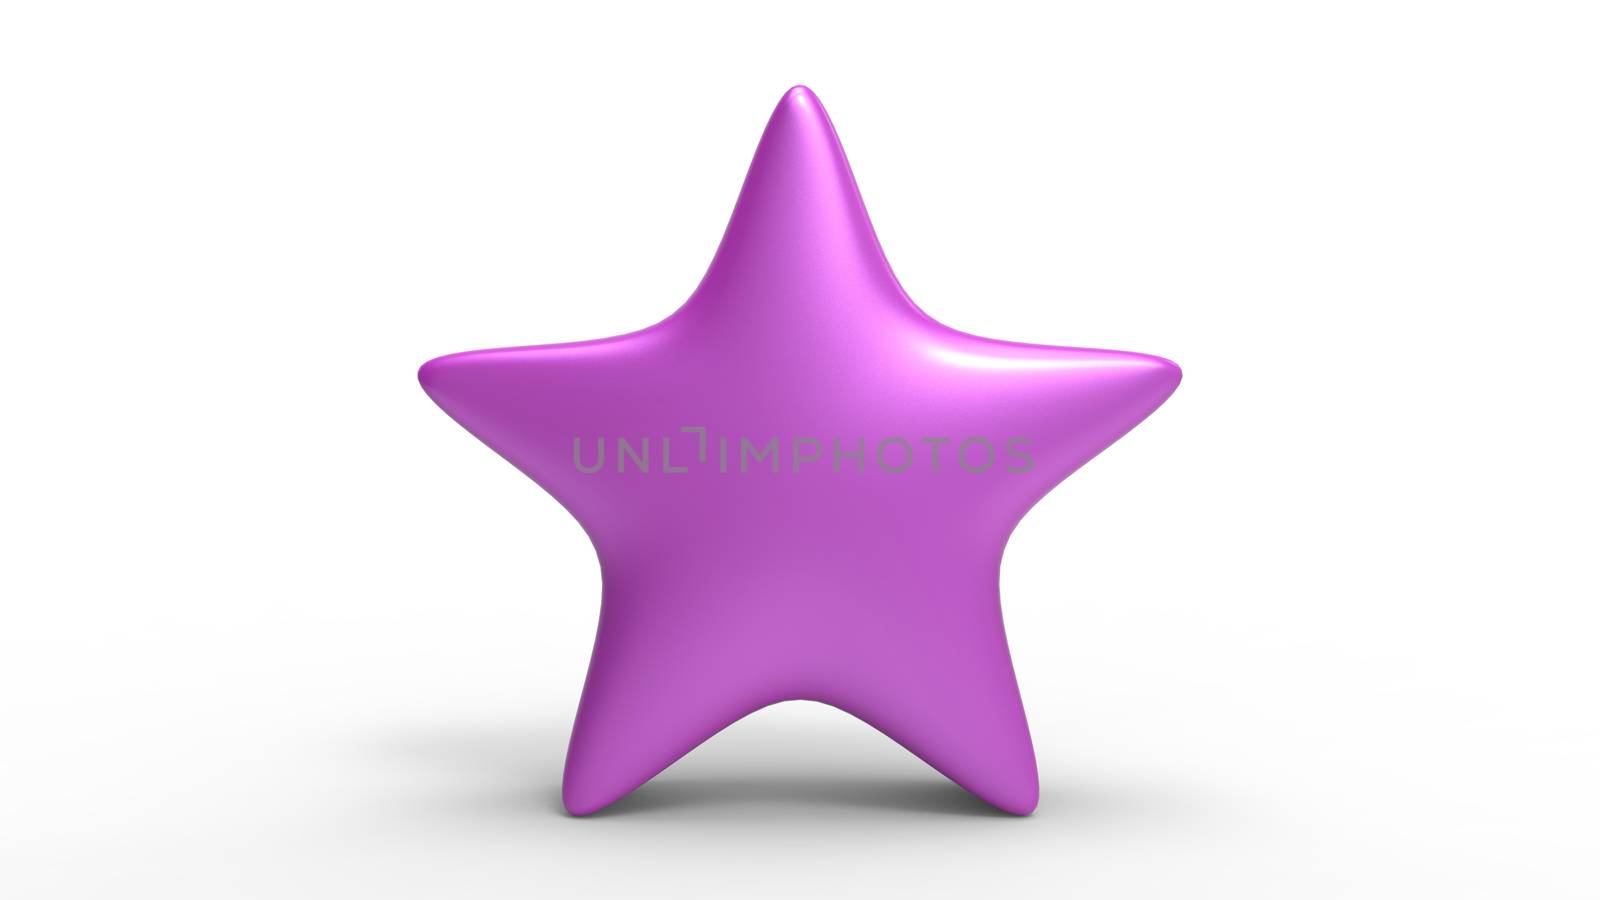 3d purple star on color background. Render and illustration of golden star for premium